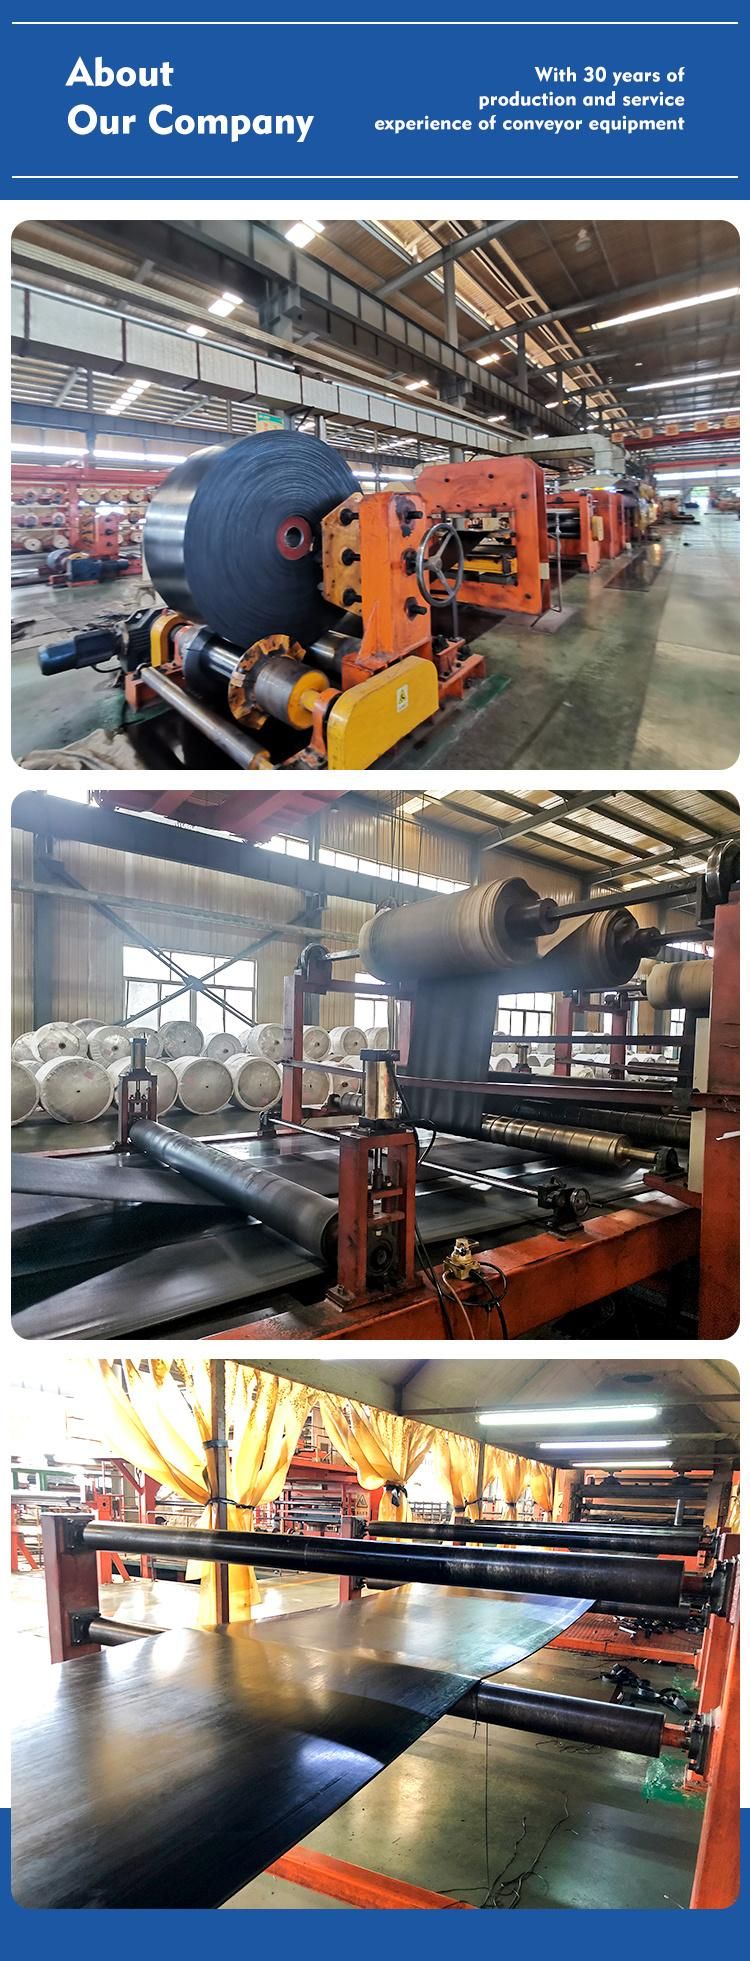 High Durability Quiet Operation Conveyor System Super Lubrication Roller